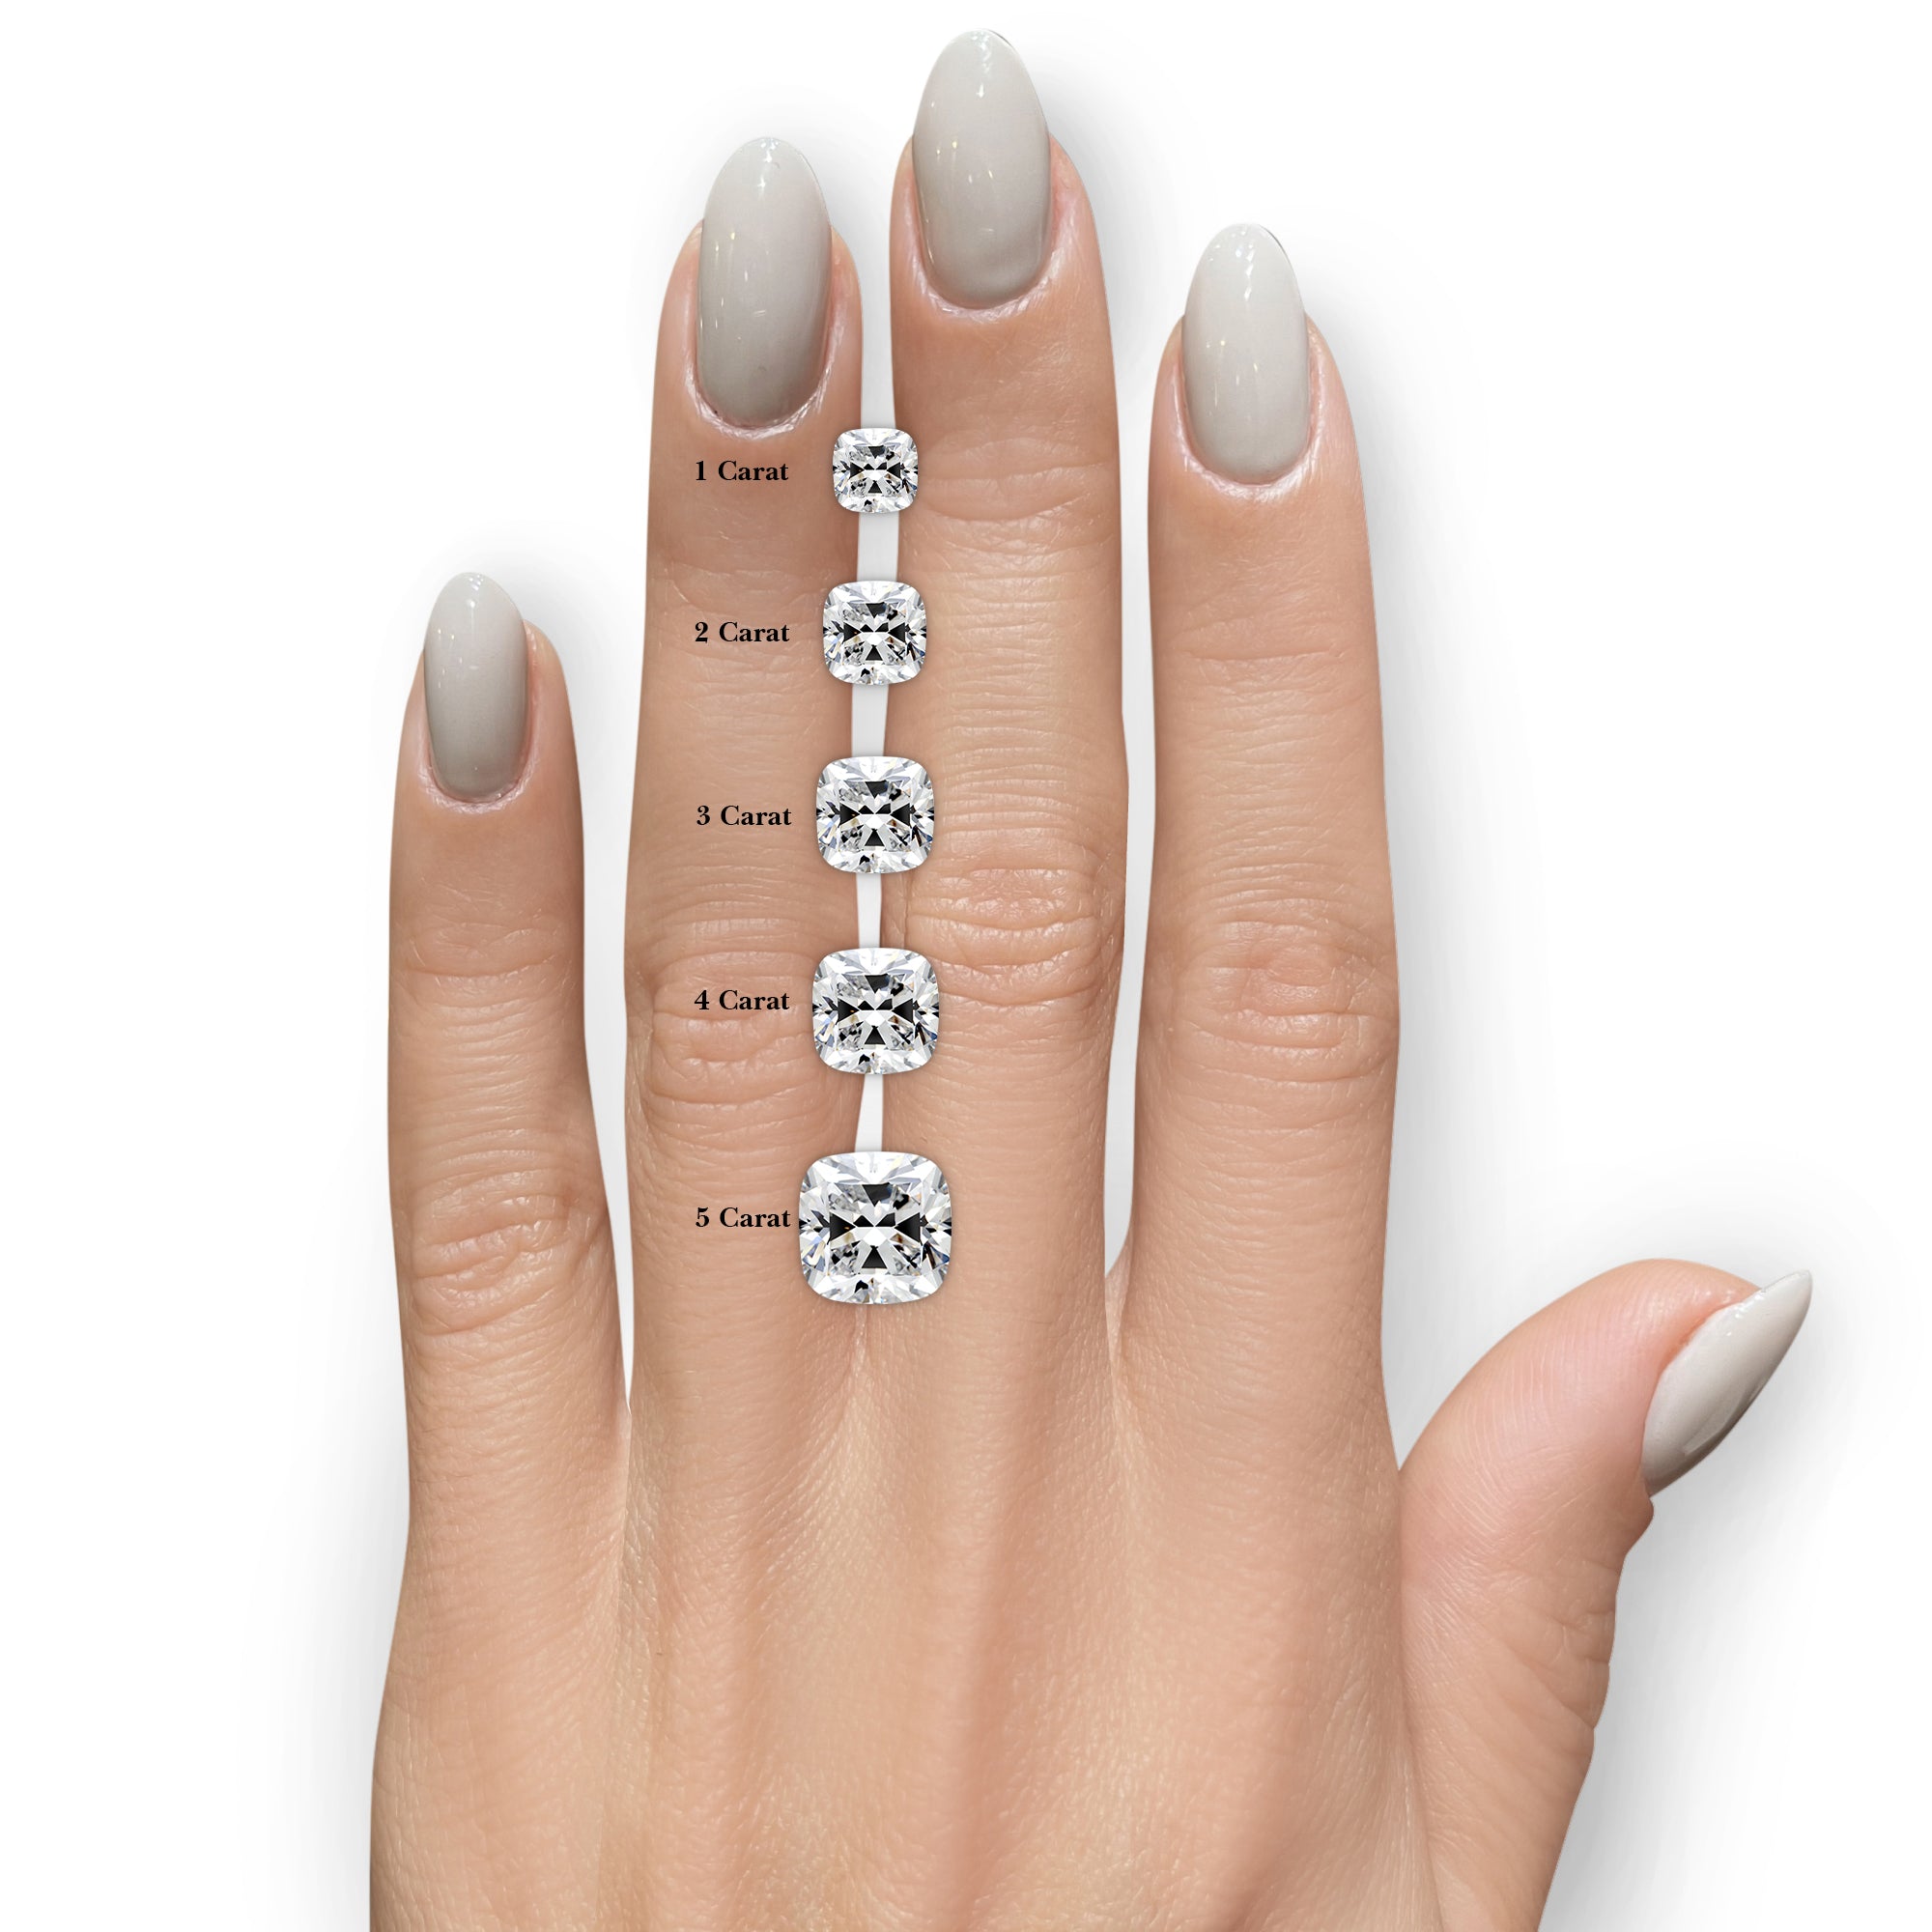 Paula Diamond Engagement Ring -14K White Gold